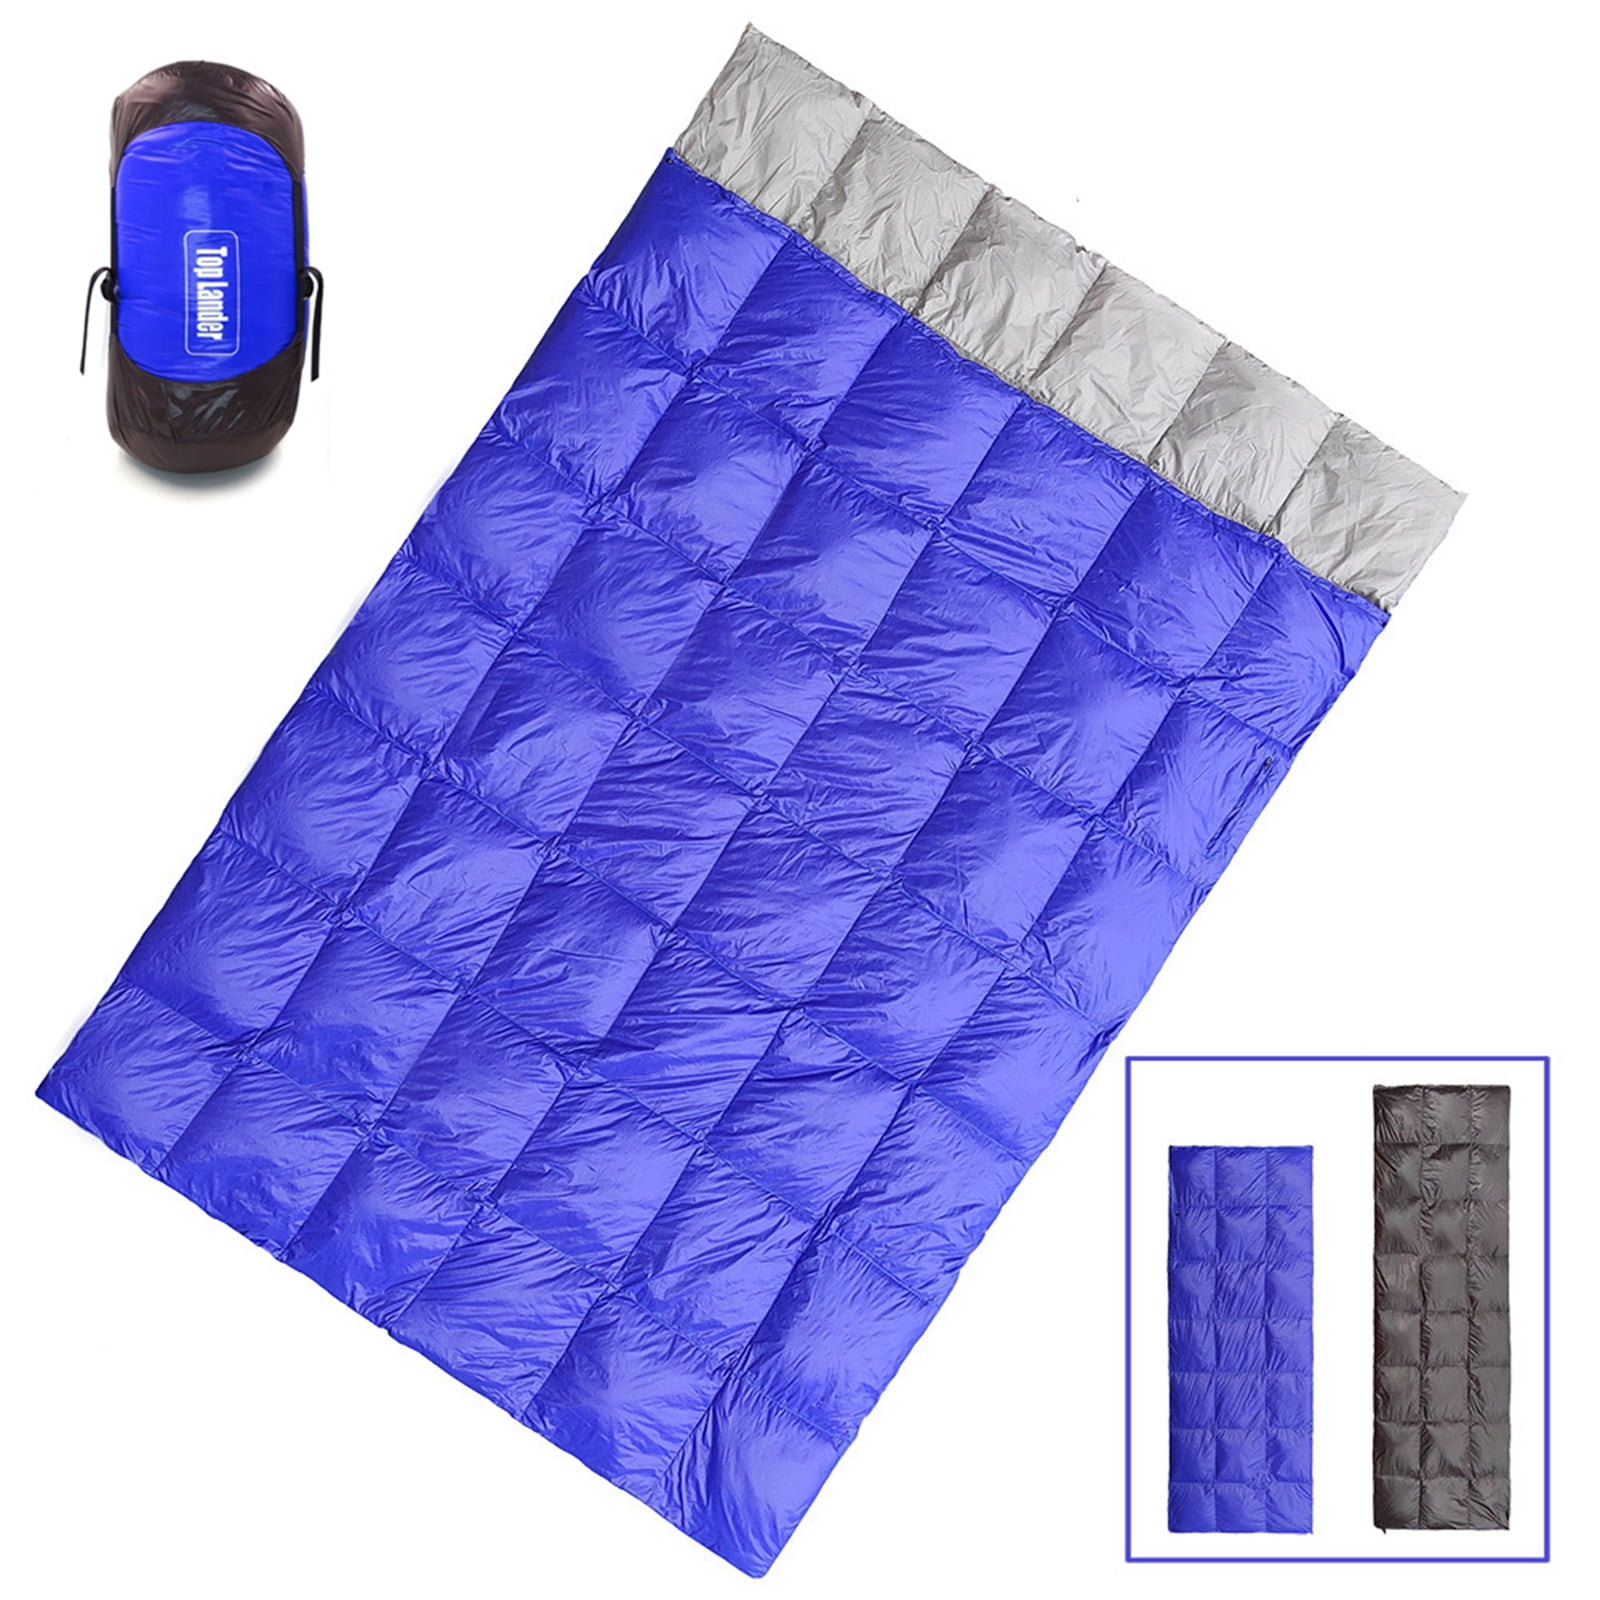 Matt nylon down sleeping bag outdoor rectangular sleeping bag warm new outdoor 